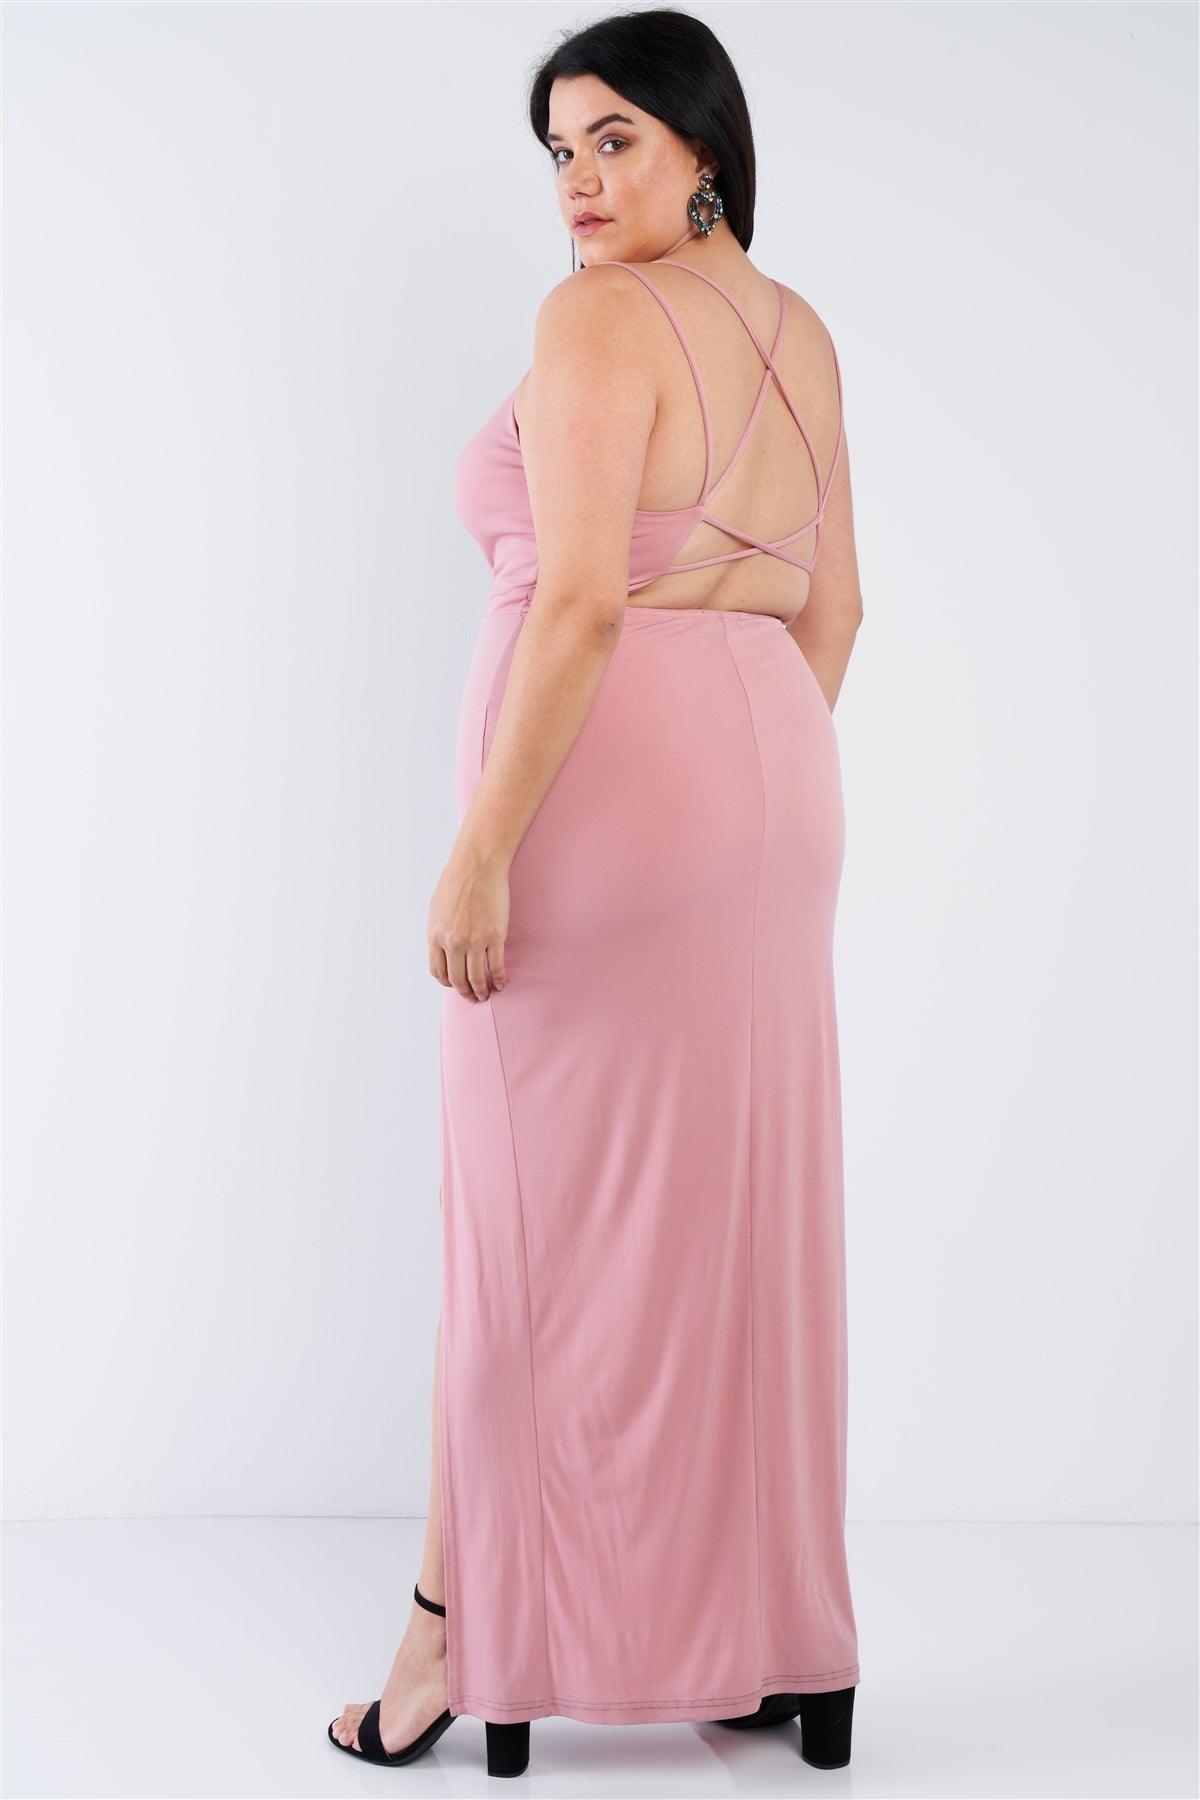 Junior Plus Size Sexy Mauve Pink Floor Length Dress /2-1-1